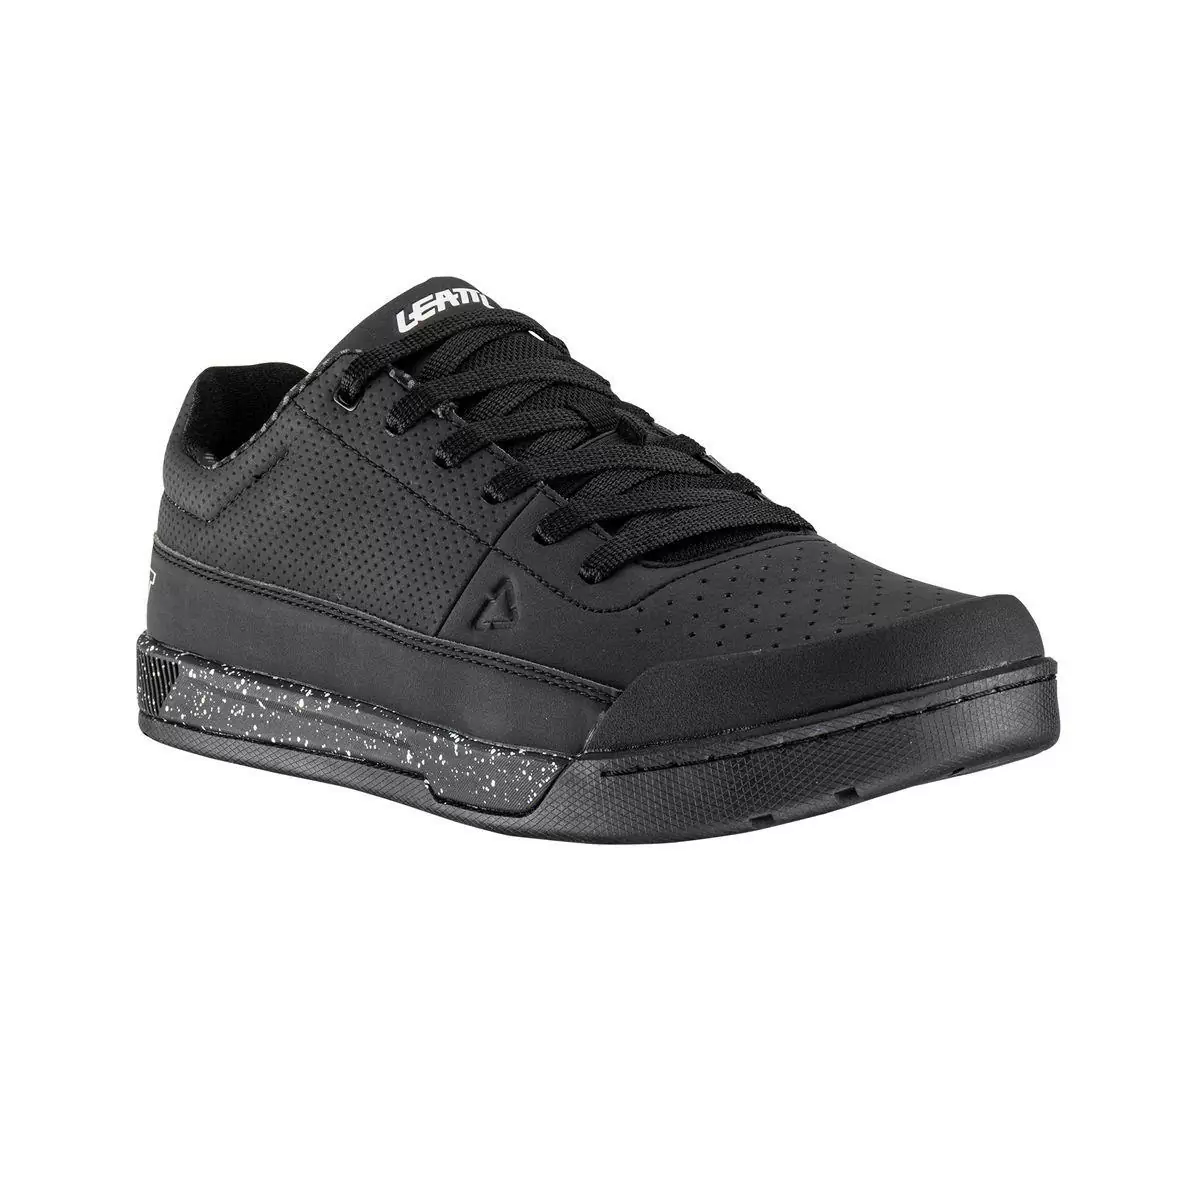 Mtb Shoes 2.0 Flat Black Size 47 #1